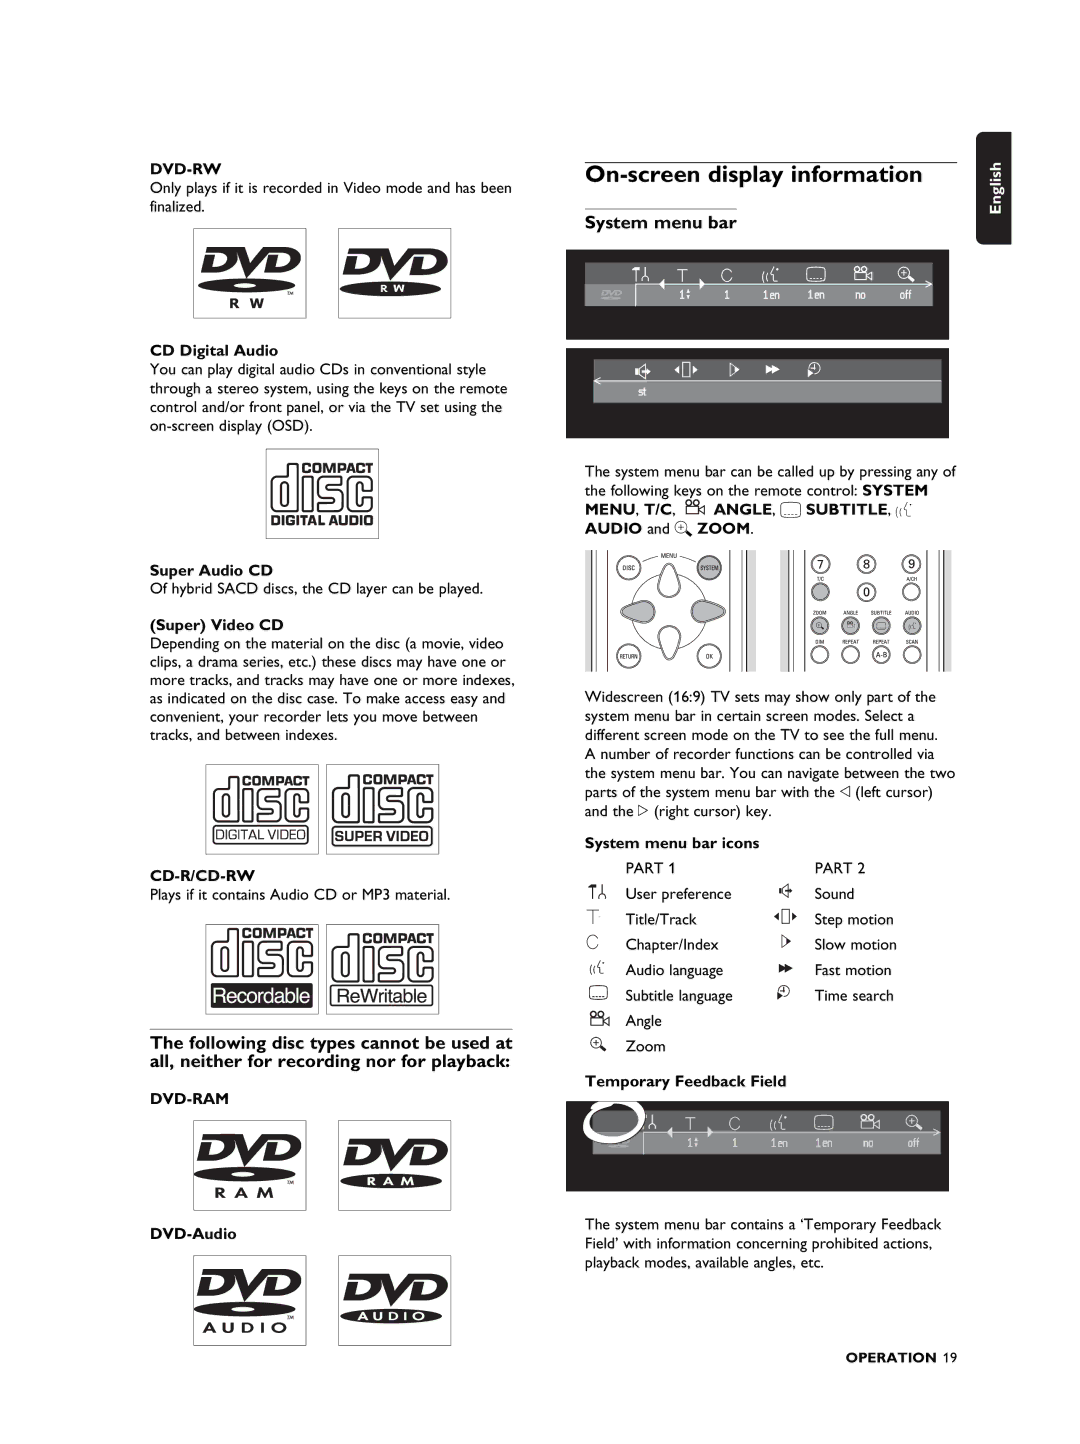 Philips DVDR990 manual On-screen display information, System menu bar, Dvd-Rw, Cd-R/Cd-Rw, Dvd-Ram 